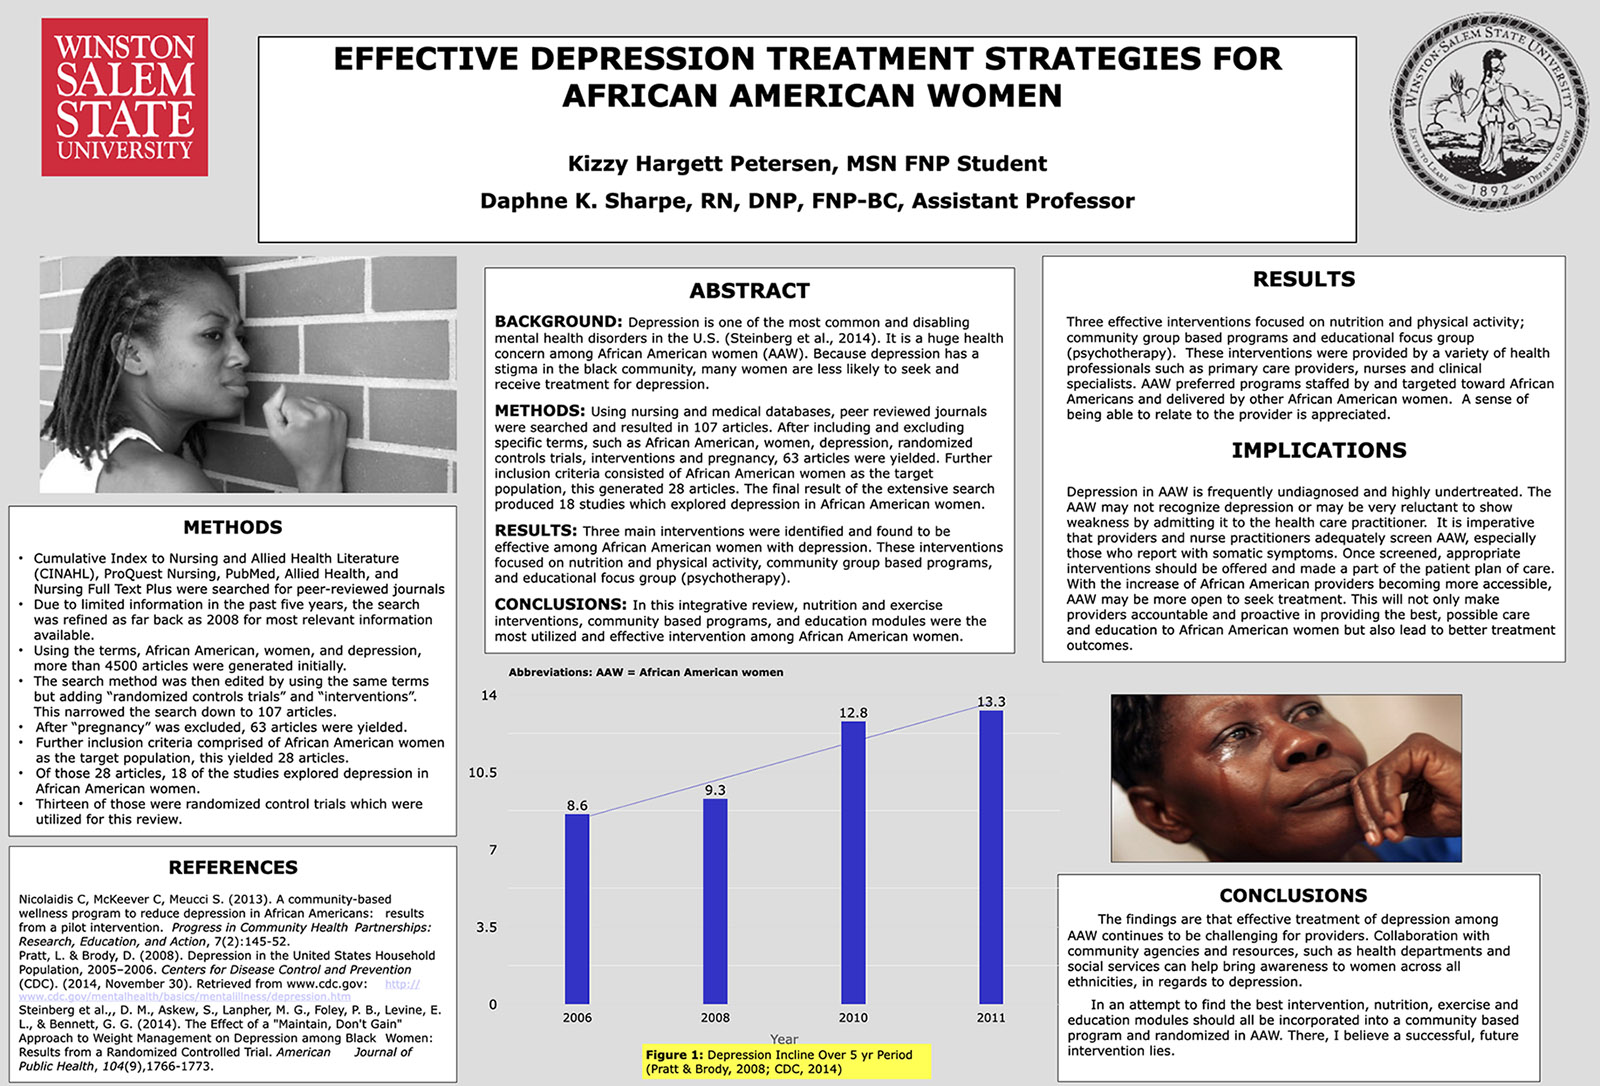 Hargett-Petersen scholary poster depression treatment strategies